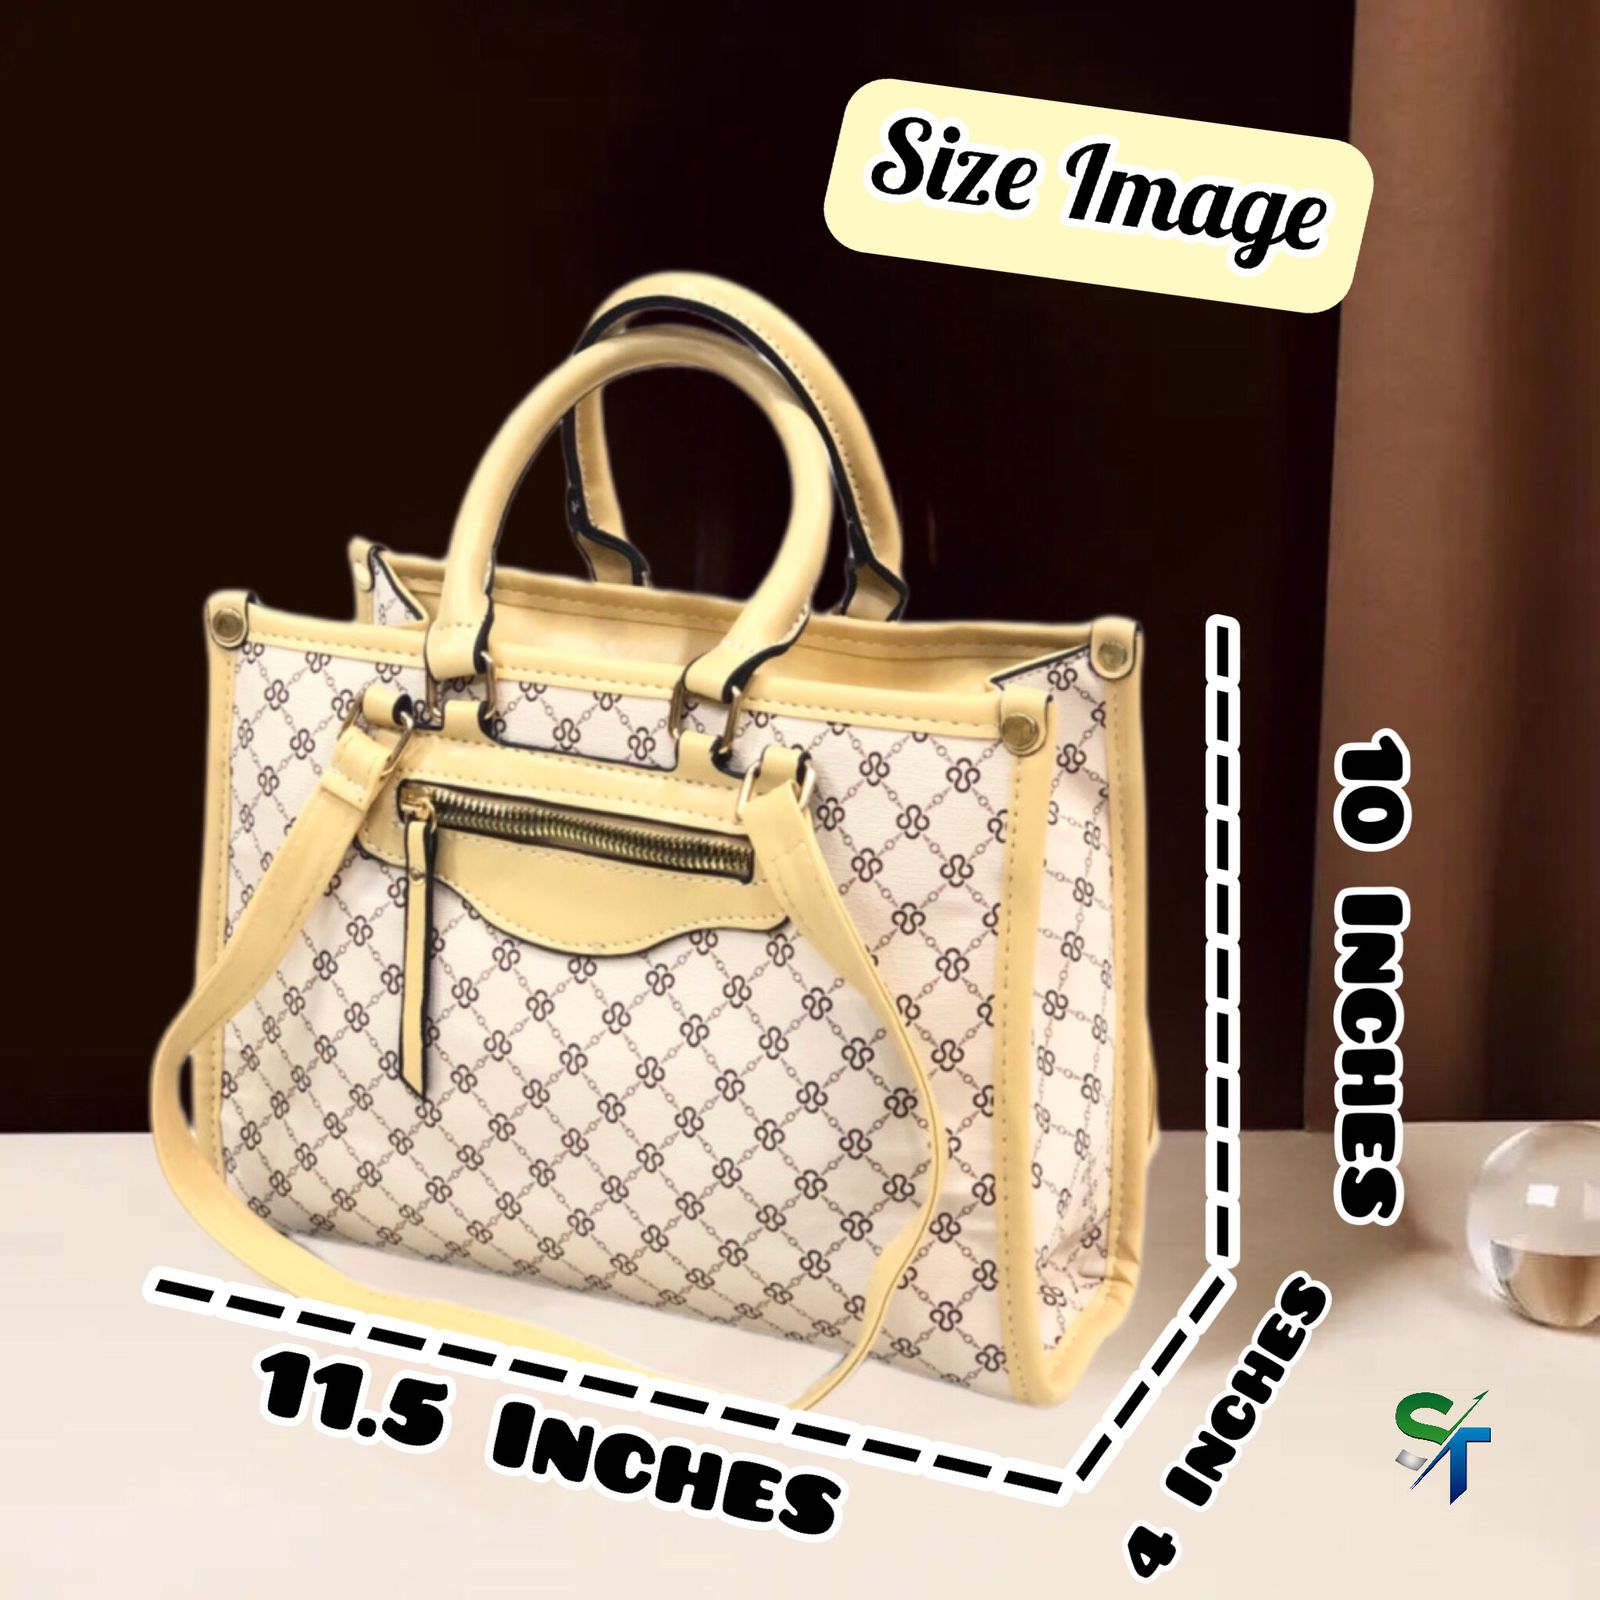 New Imported Quality Ladies Handbags in Pakistan